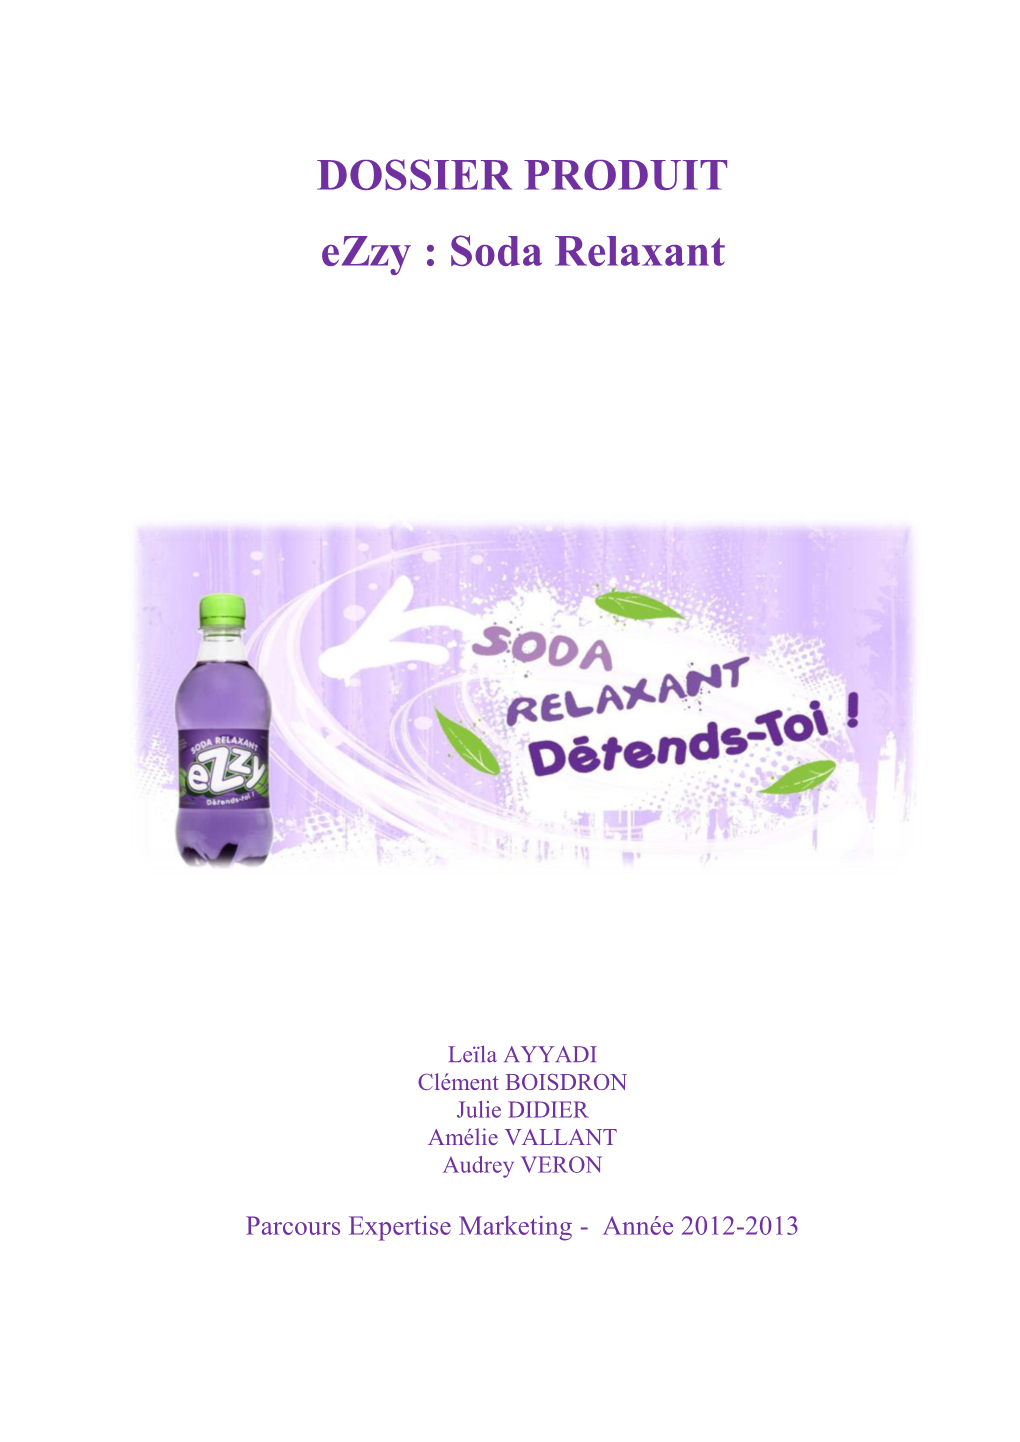 DOSSIER PRODUIT Ezzy : Soda Relaxant